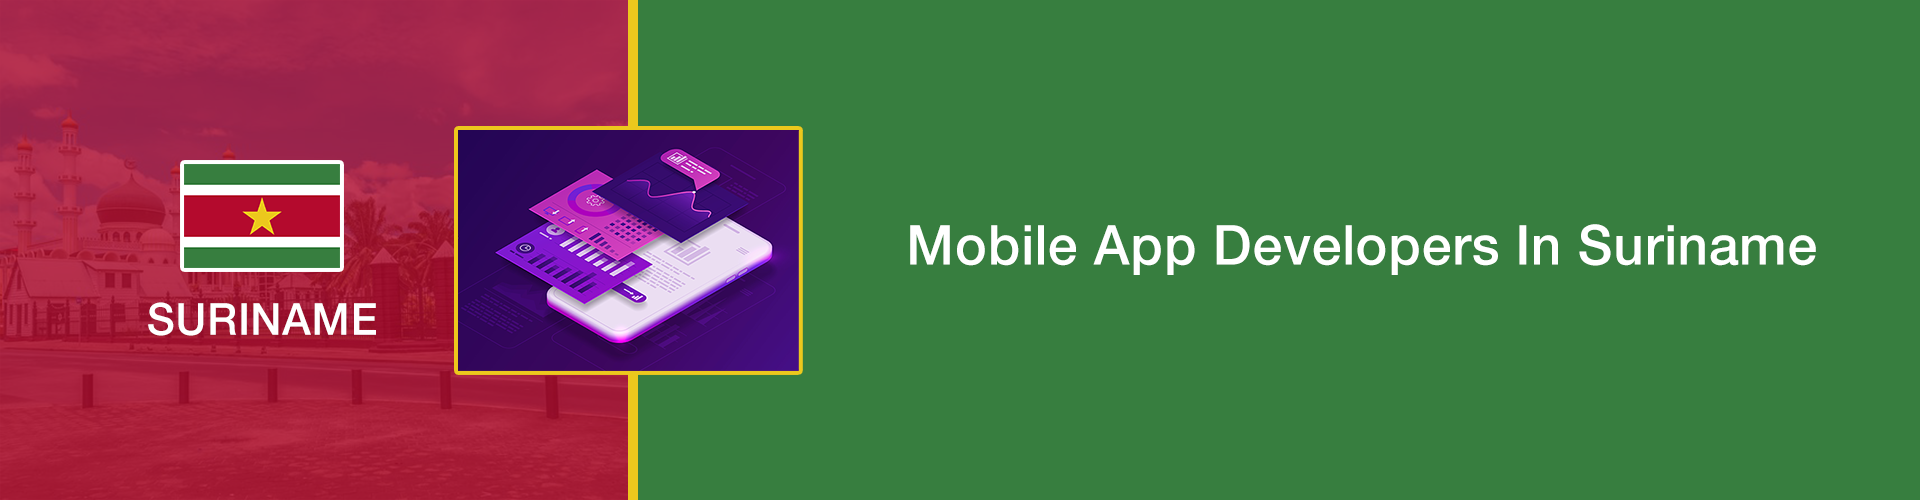 mobile app development suriname